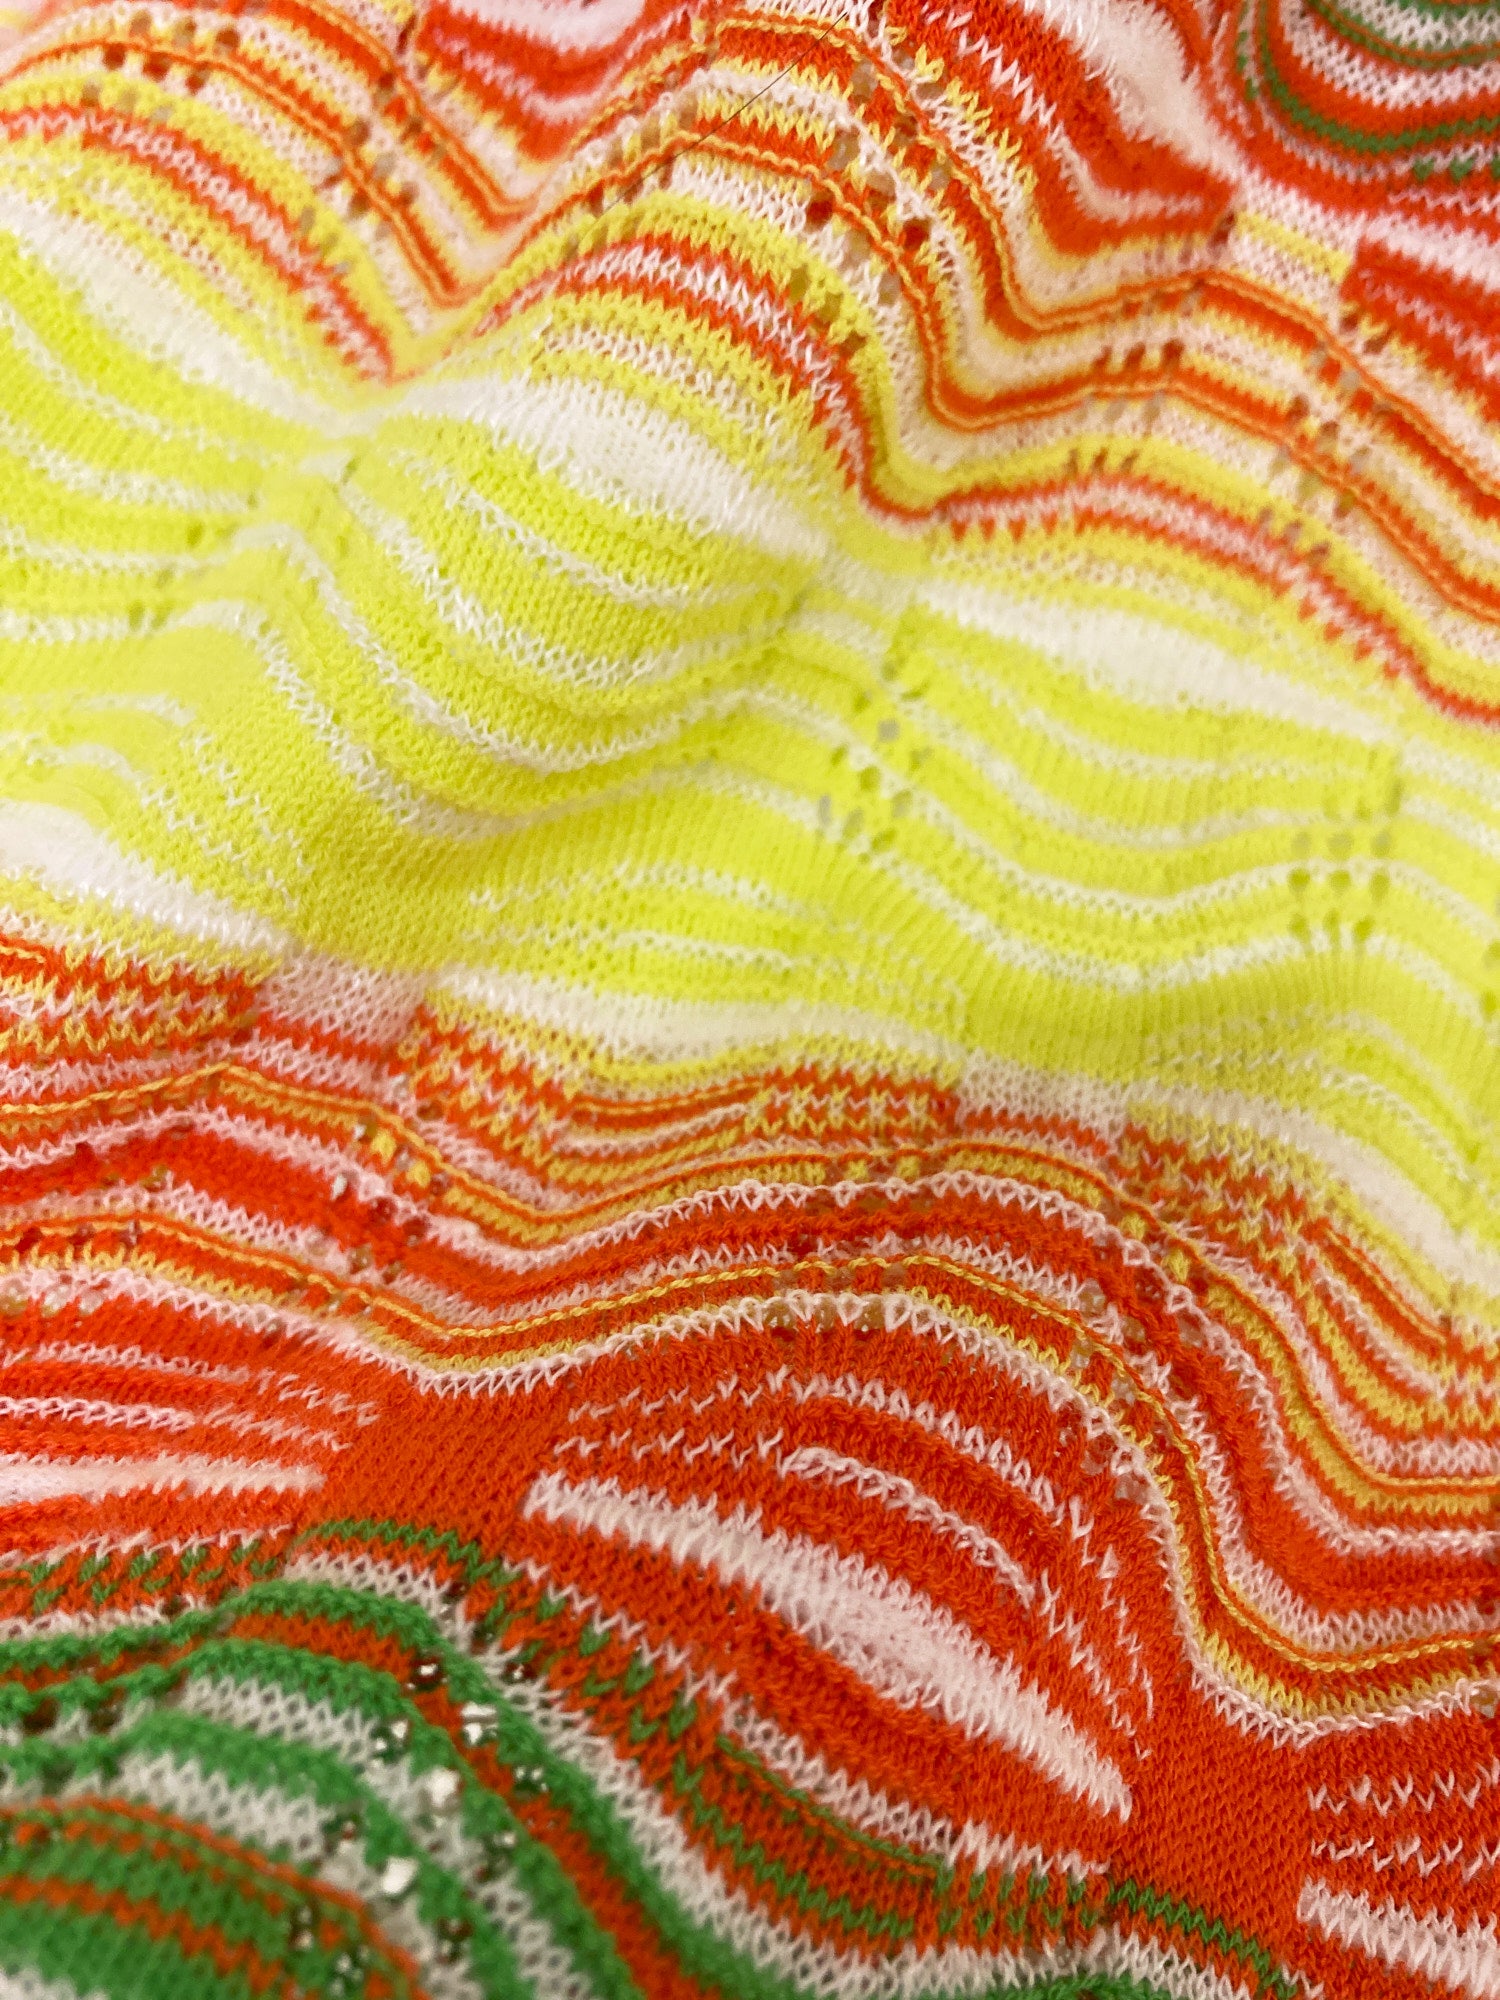 M Missoni multi color patterned knit sleeveless dress - IT 40